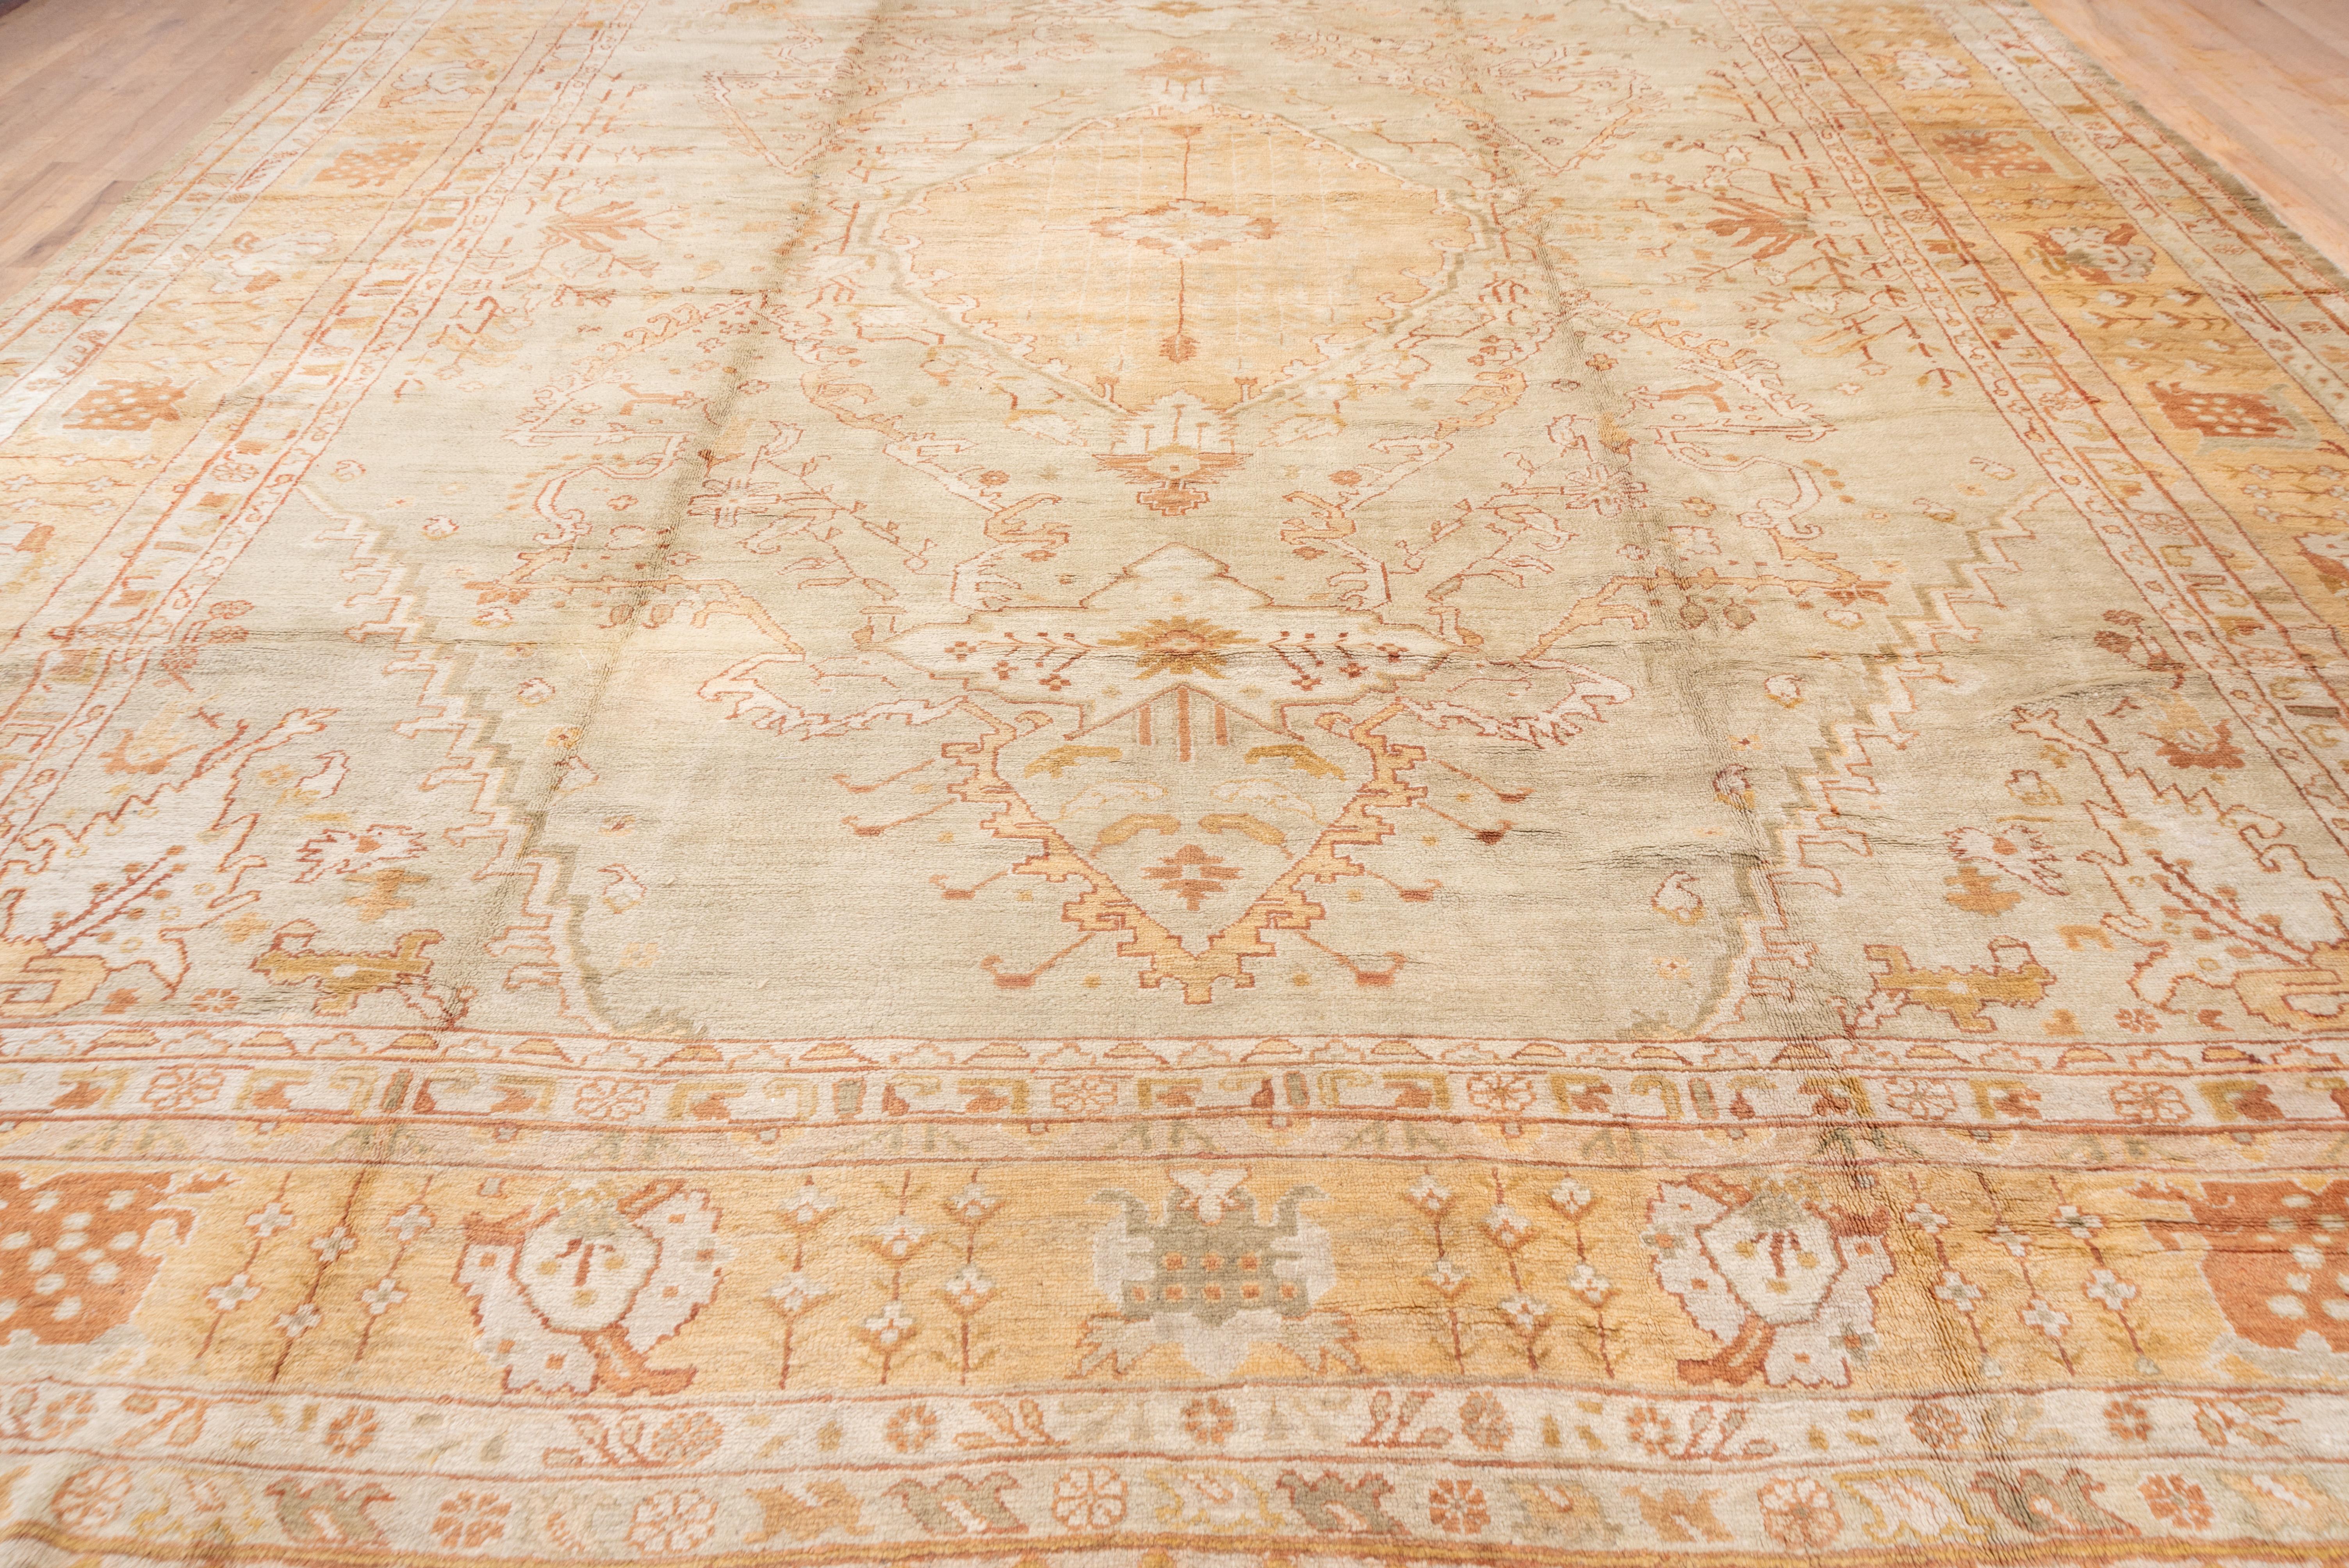 Hand-Knotted Fine Antique Oushak Carpet, Seafoam Allover Field, Gold Borders, Orange Accents For Sale